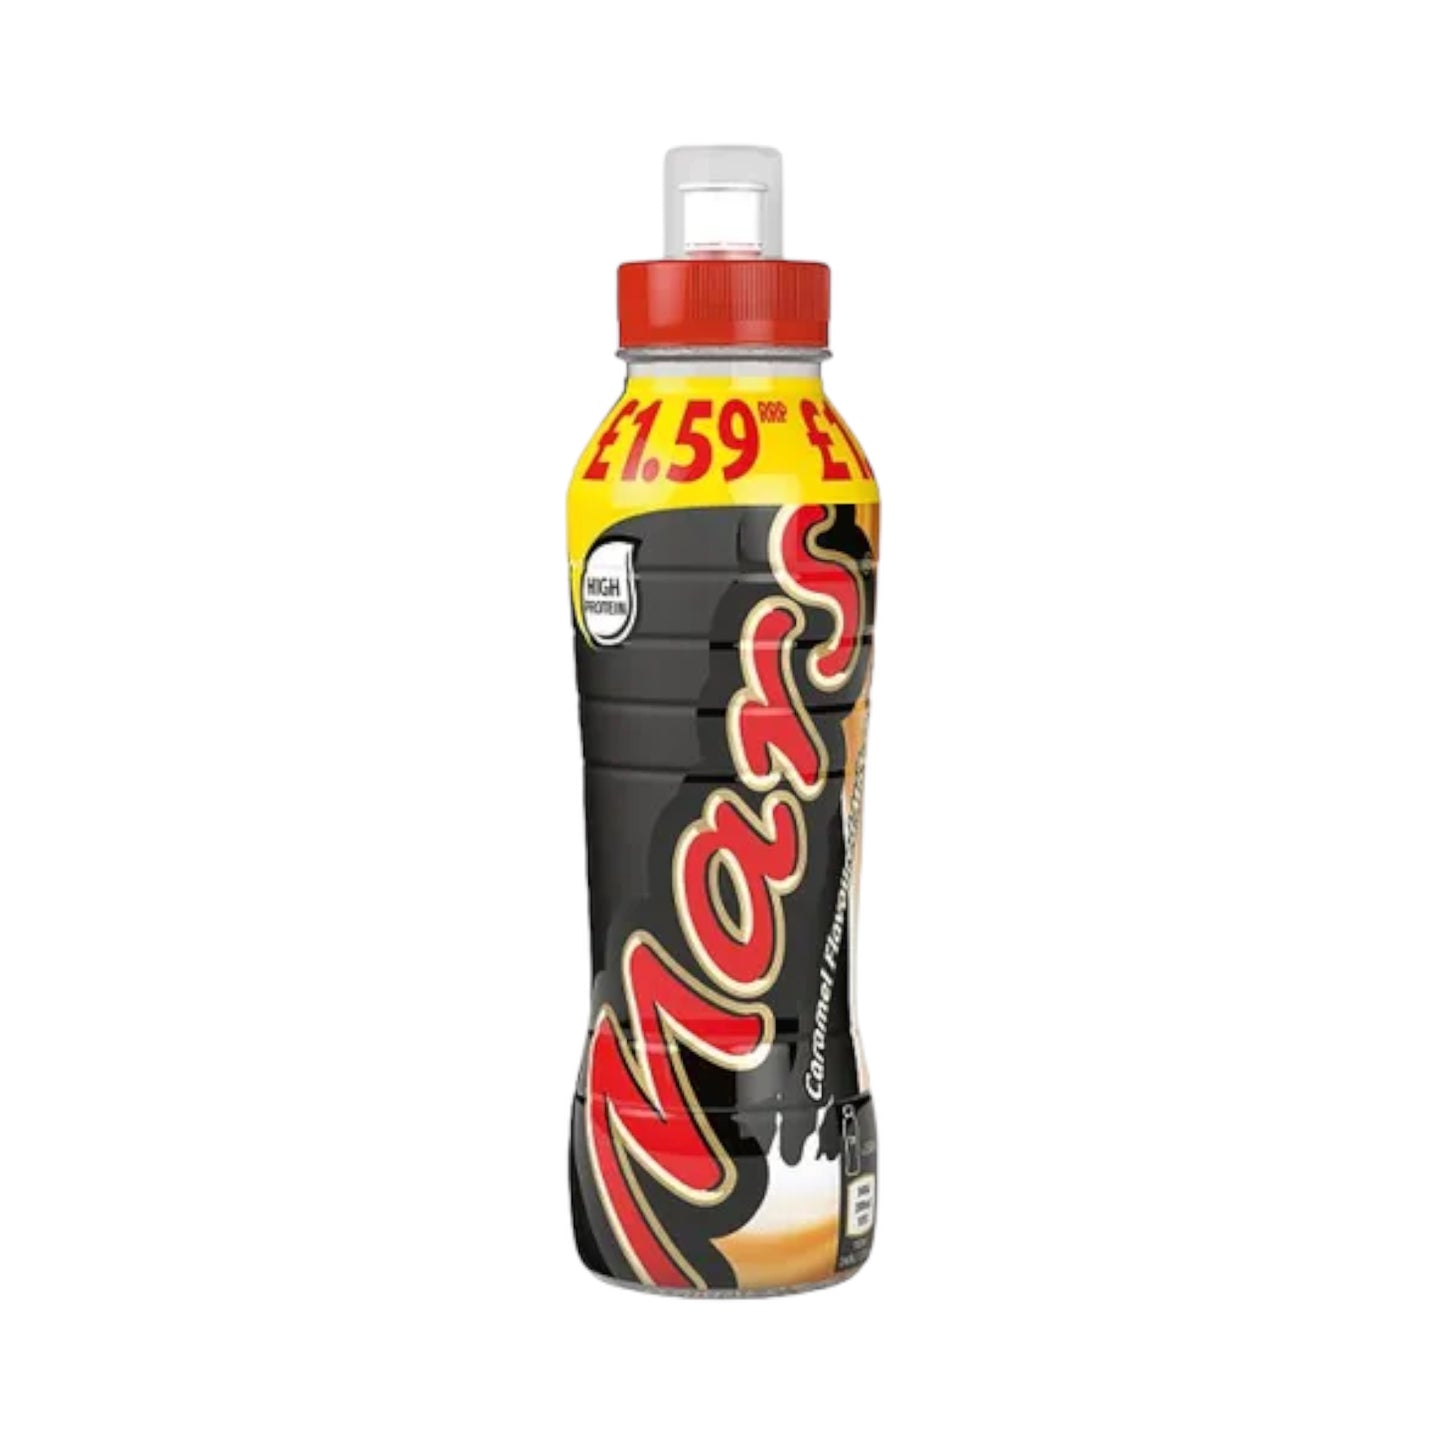 Mars Caramel Milk Drink - 350ml (PMP £1.59)